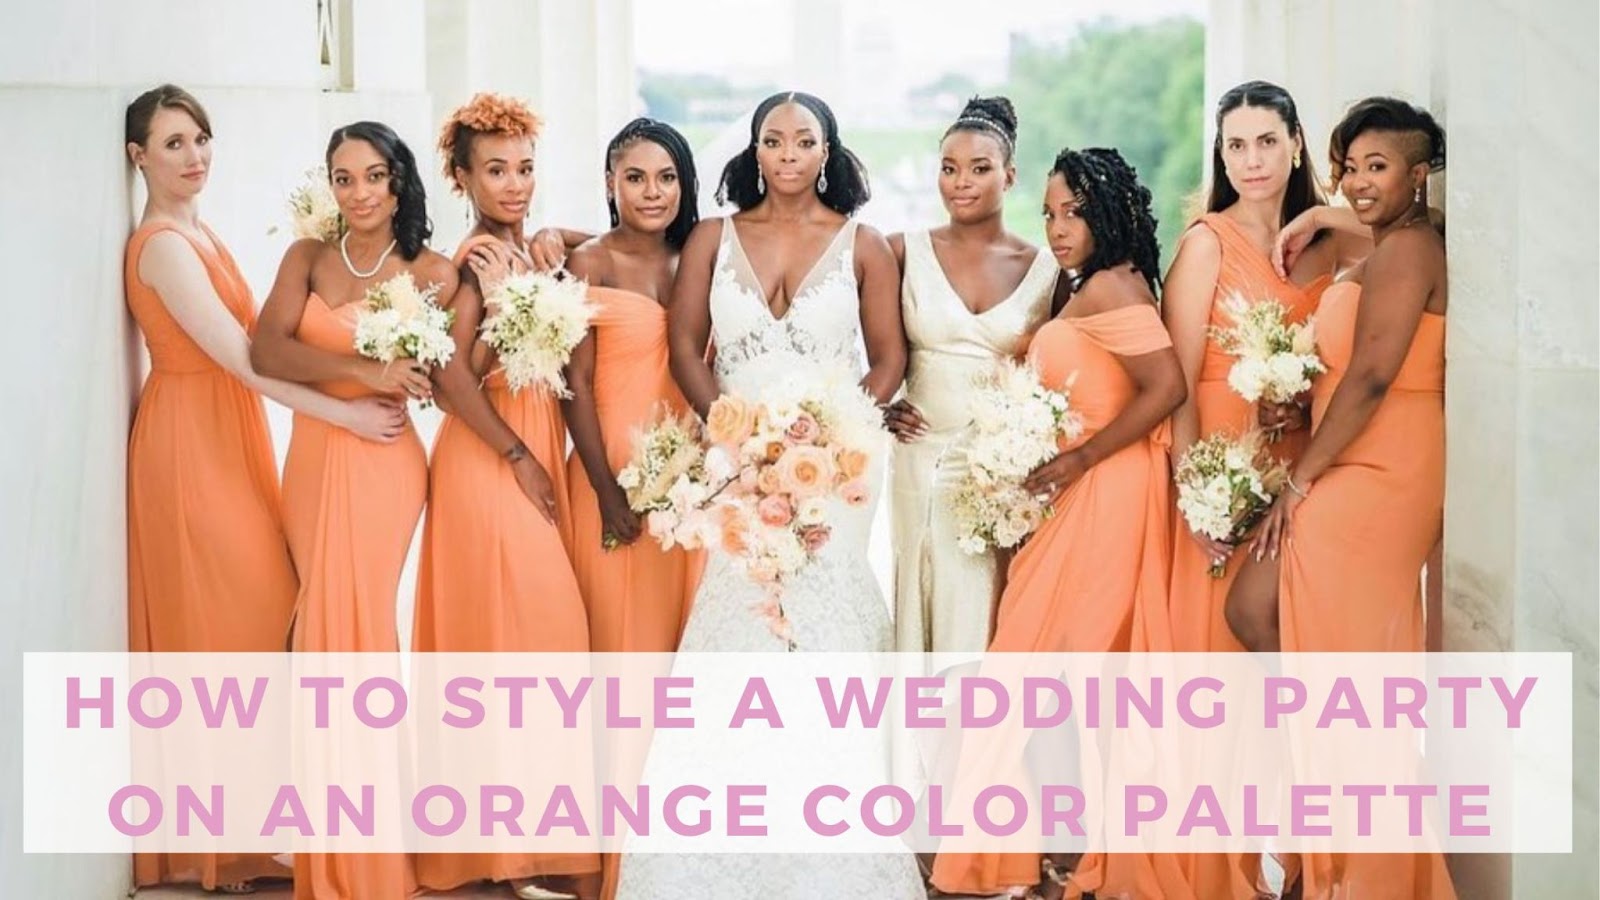 Orange Color Palette: 5 Wedding Party Tips